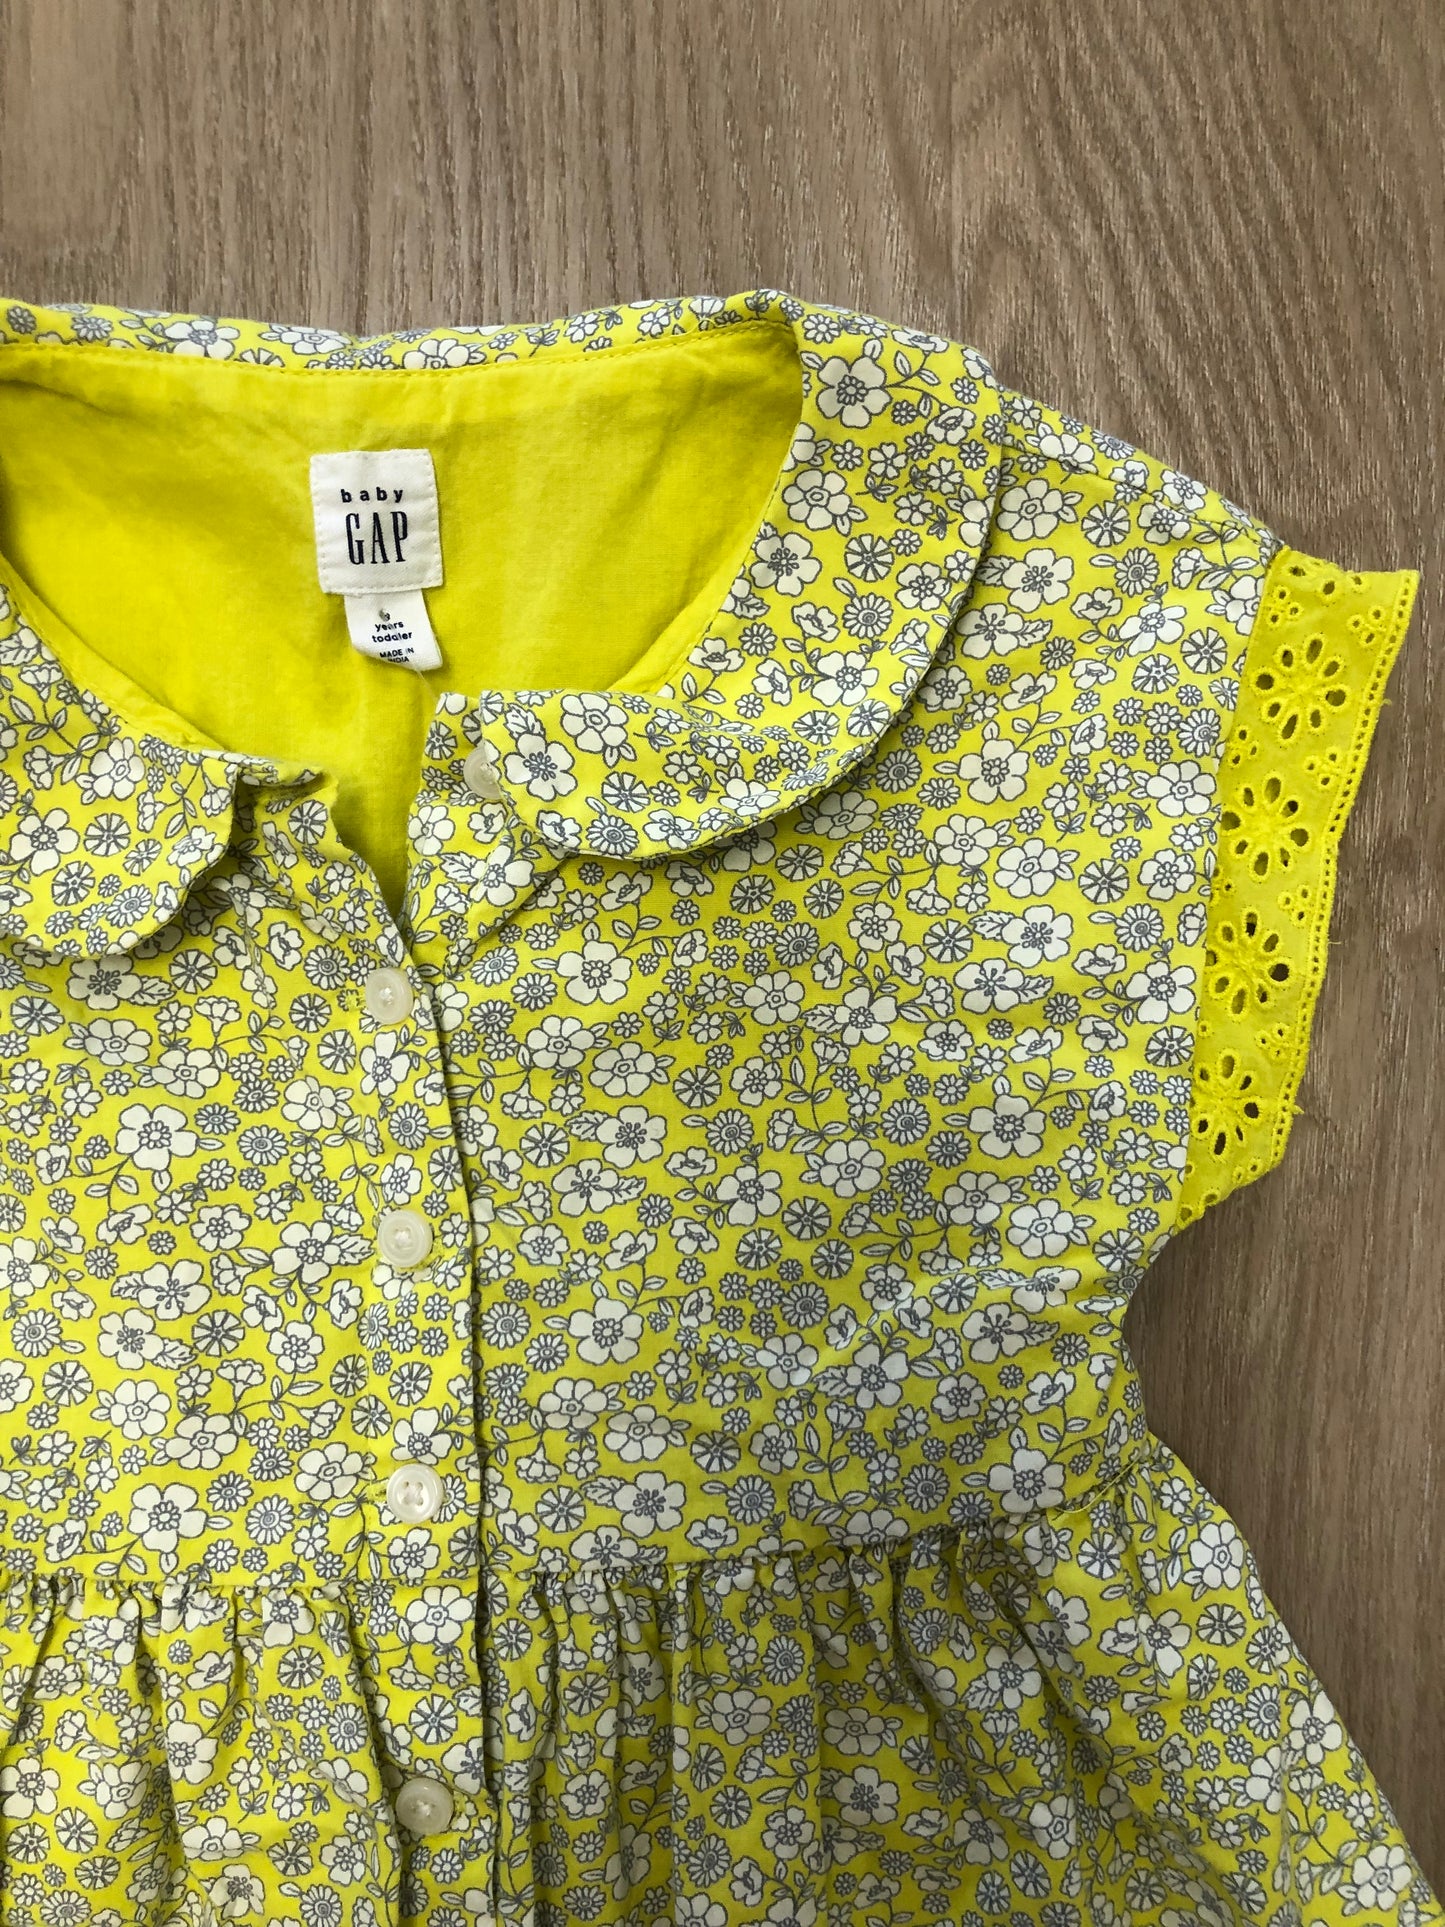 GAP Child Size 3T Yellow Floral Dress